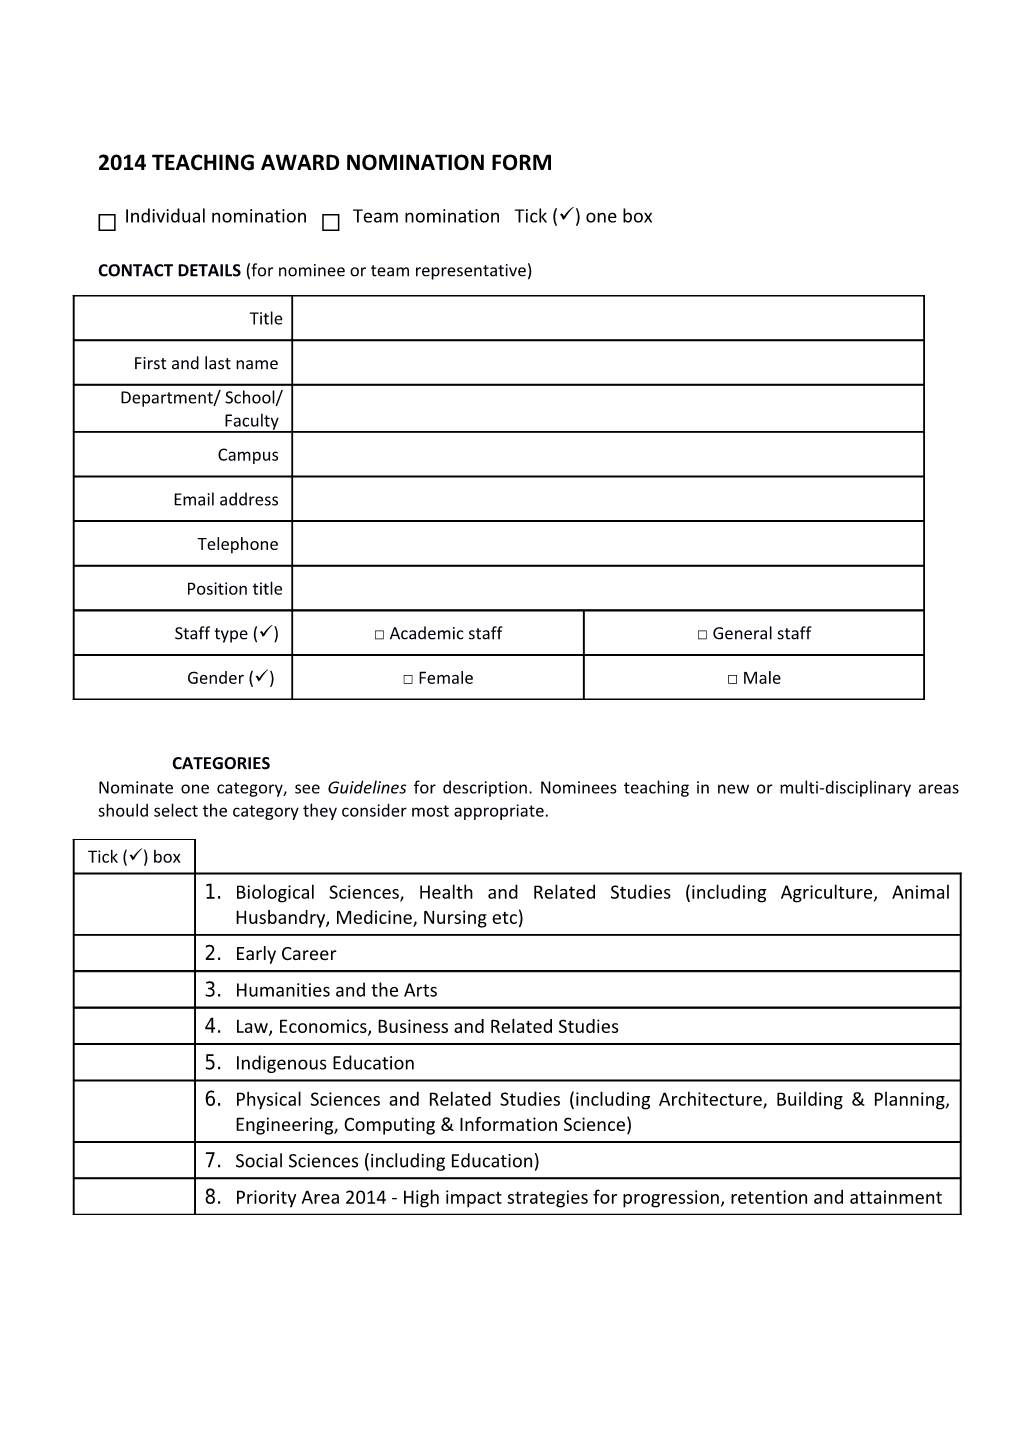 2014 Teaching Award Nomination Form